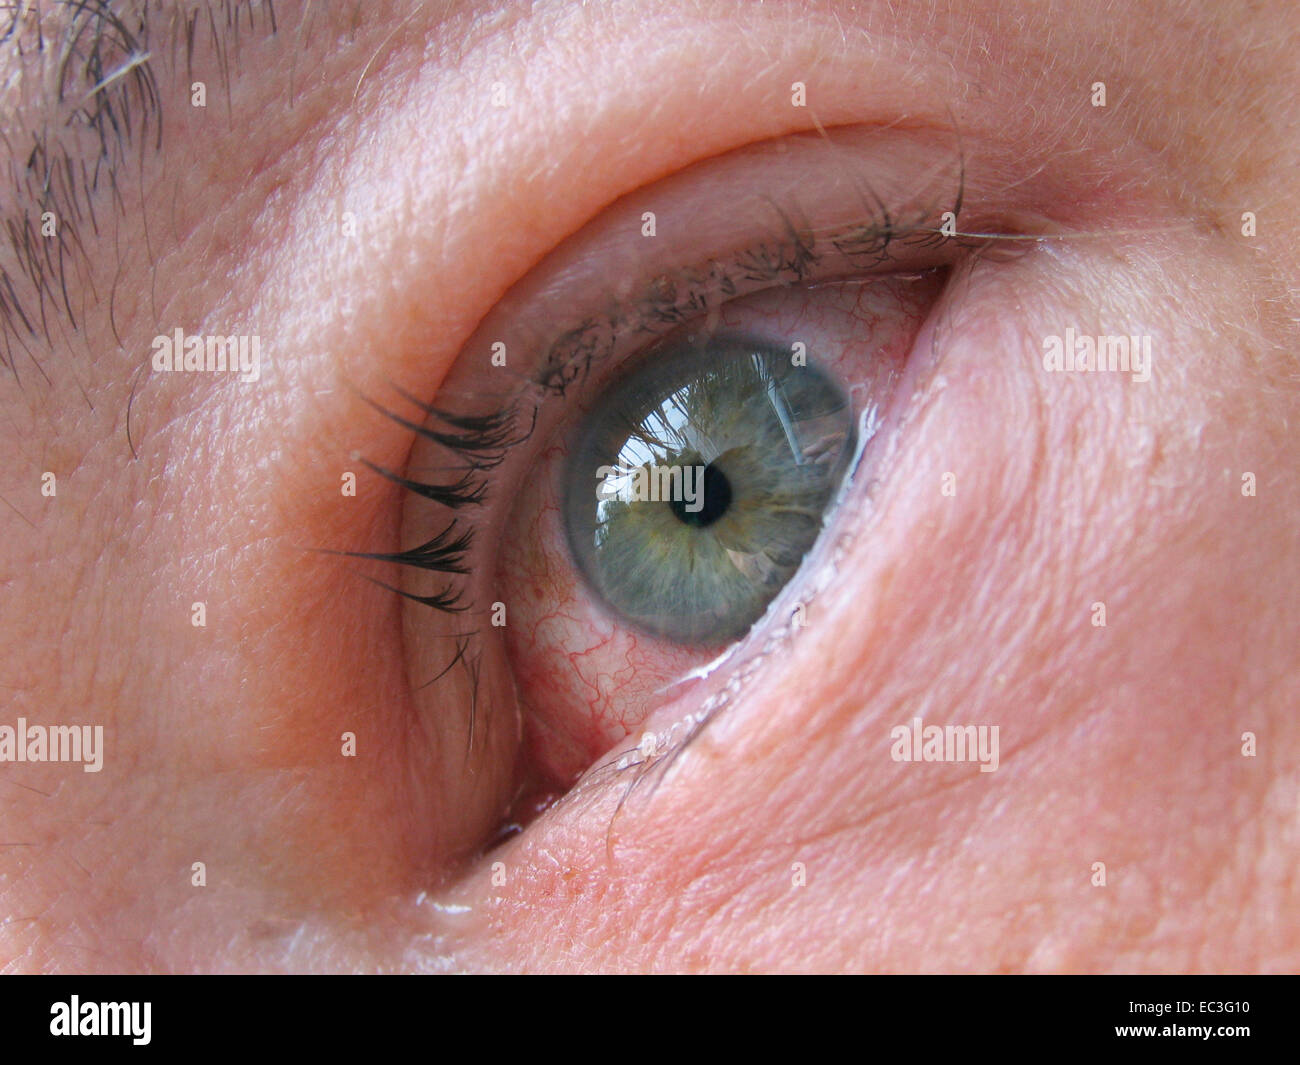 heavily inflammed eye Stock Photo